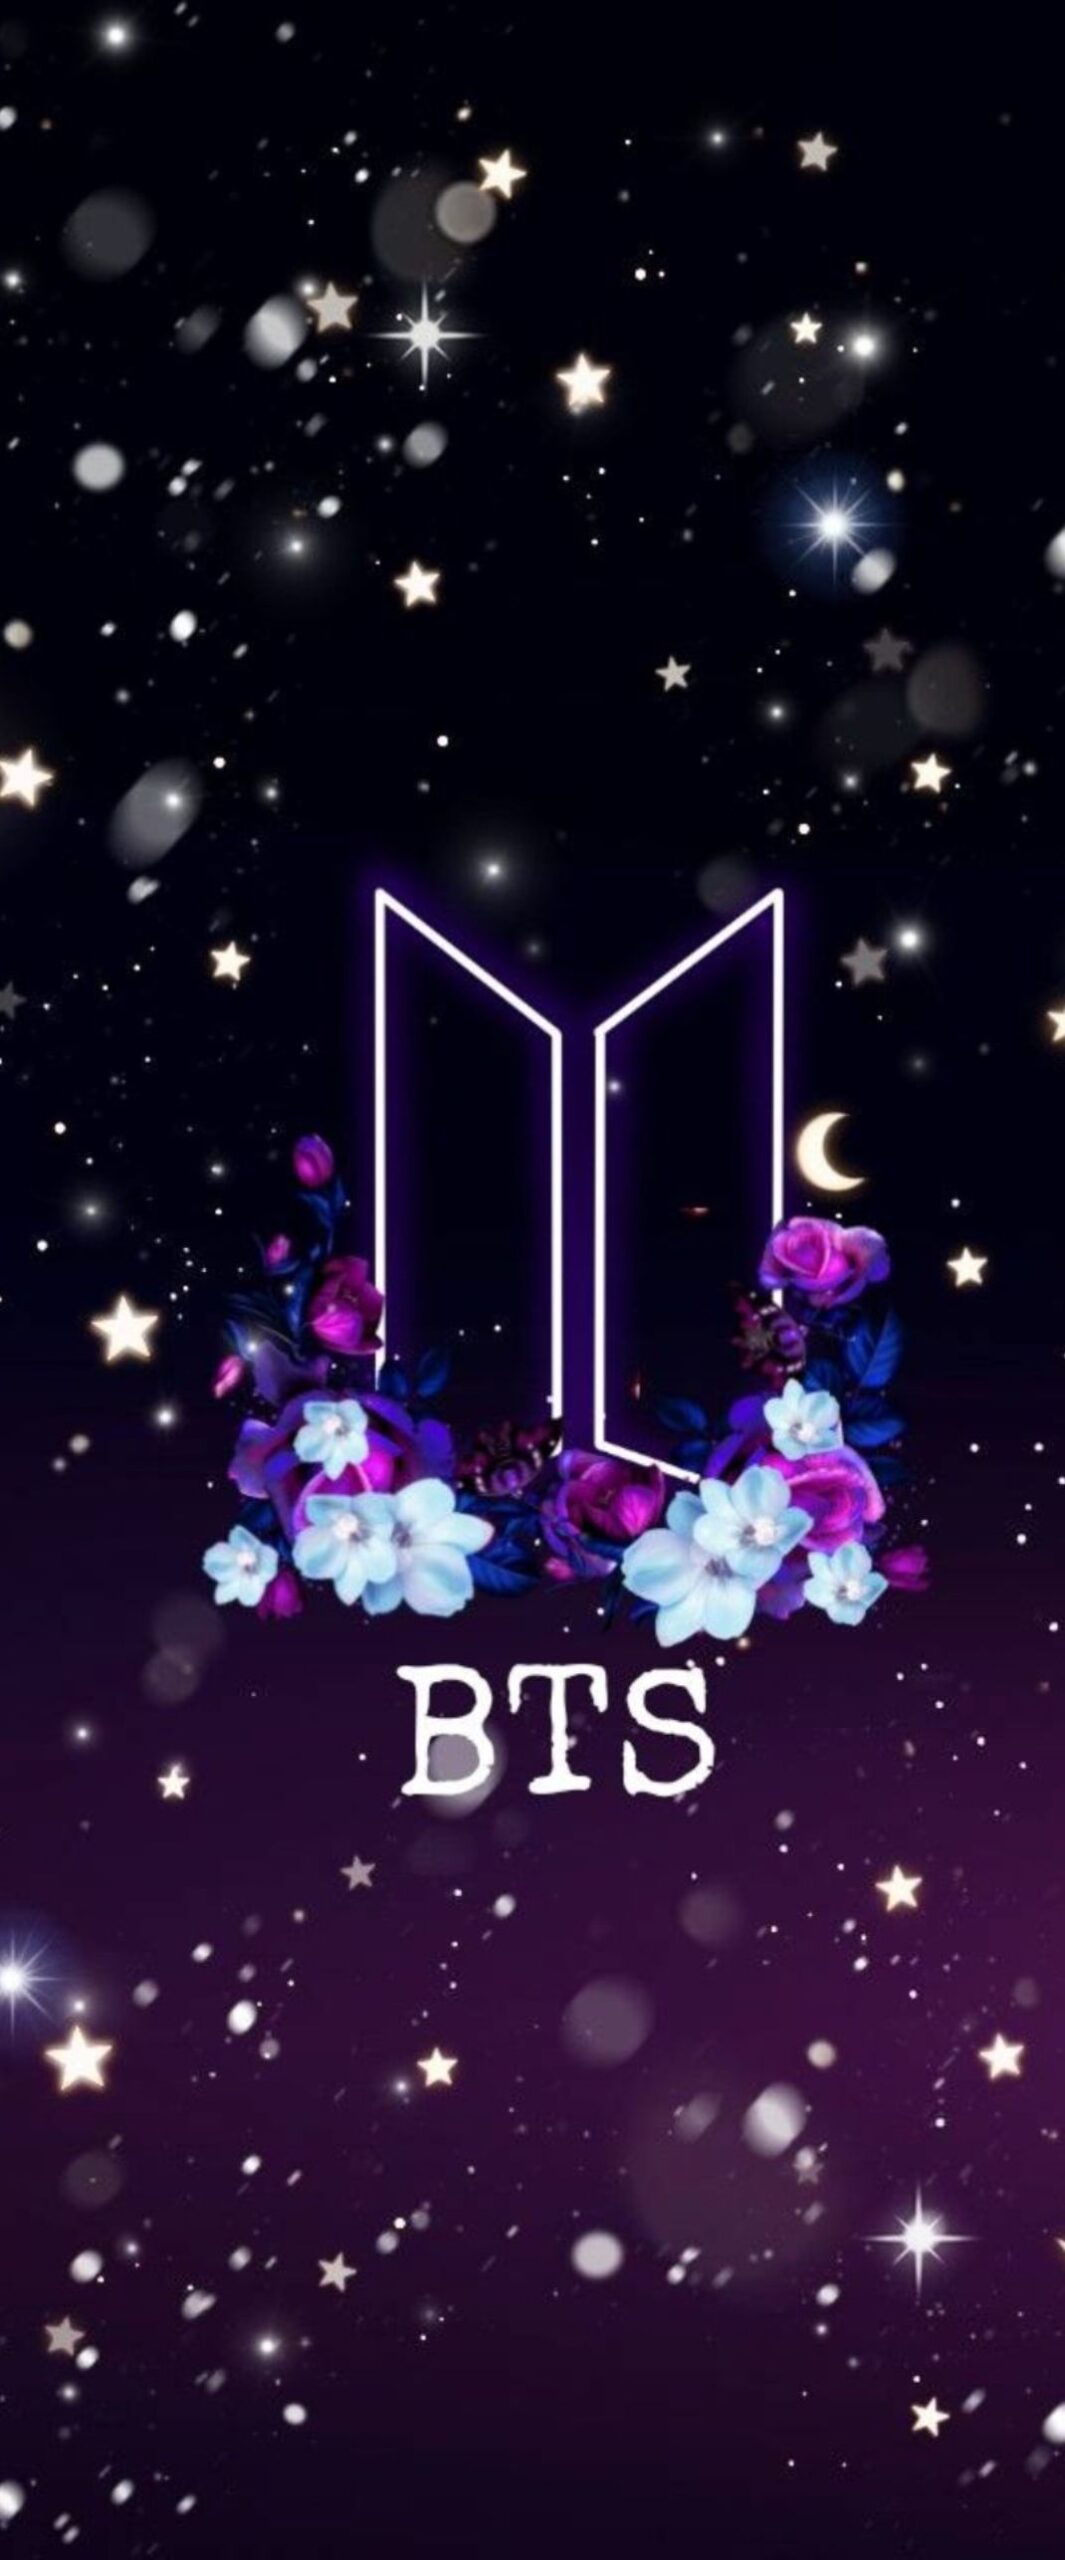 BTS Logo iPhone Wallpaper 4k